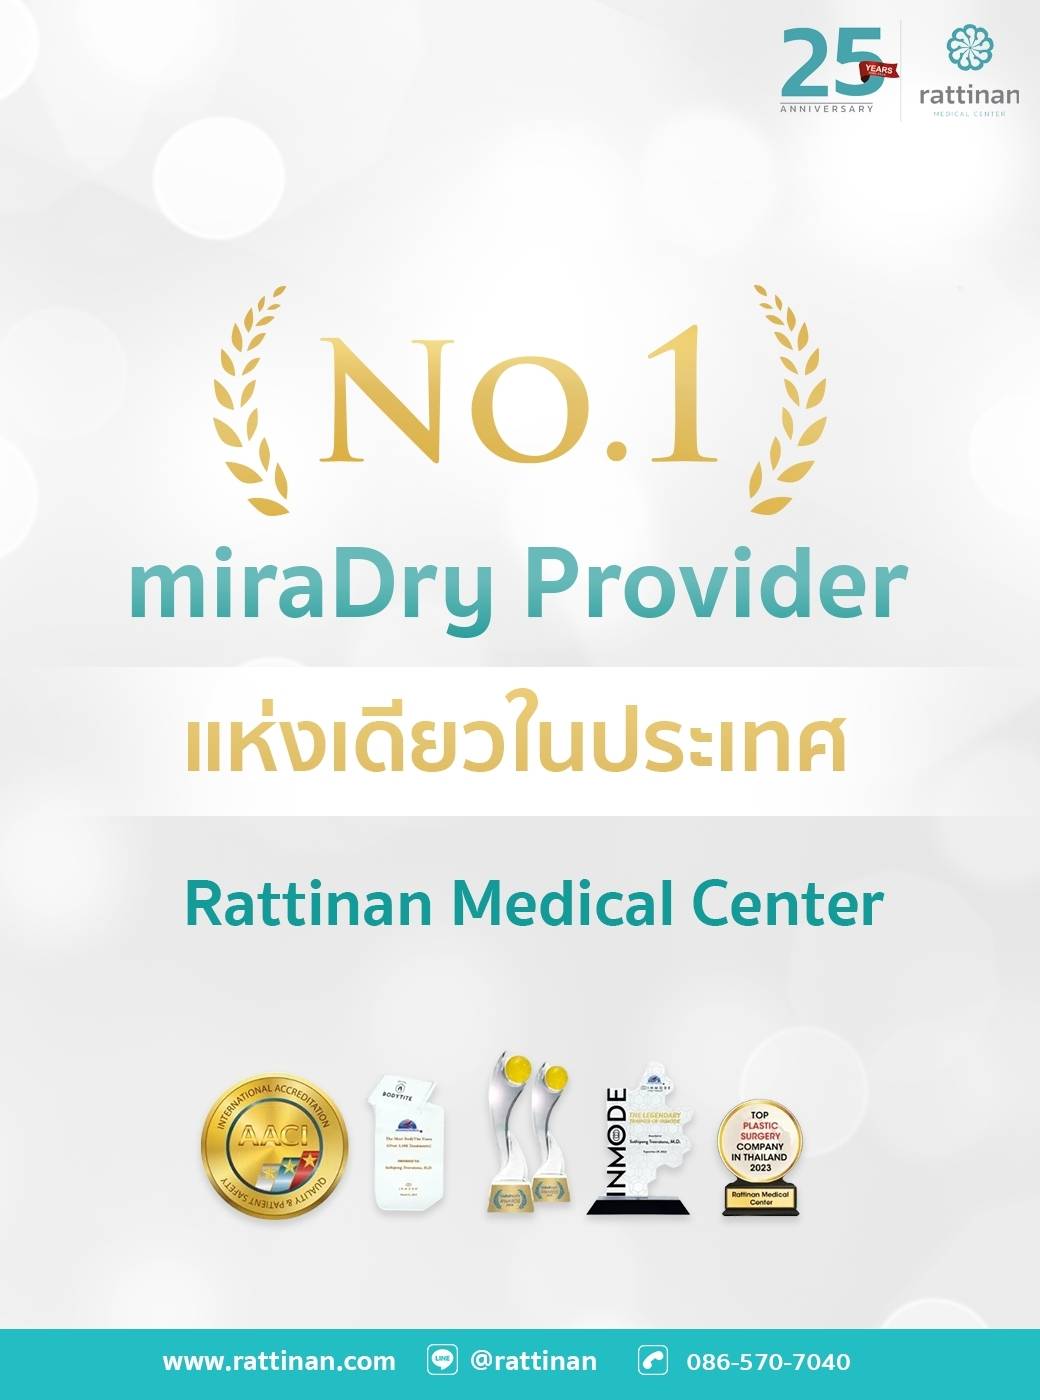 miradry Provider in Thailand